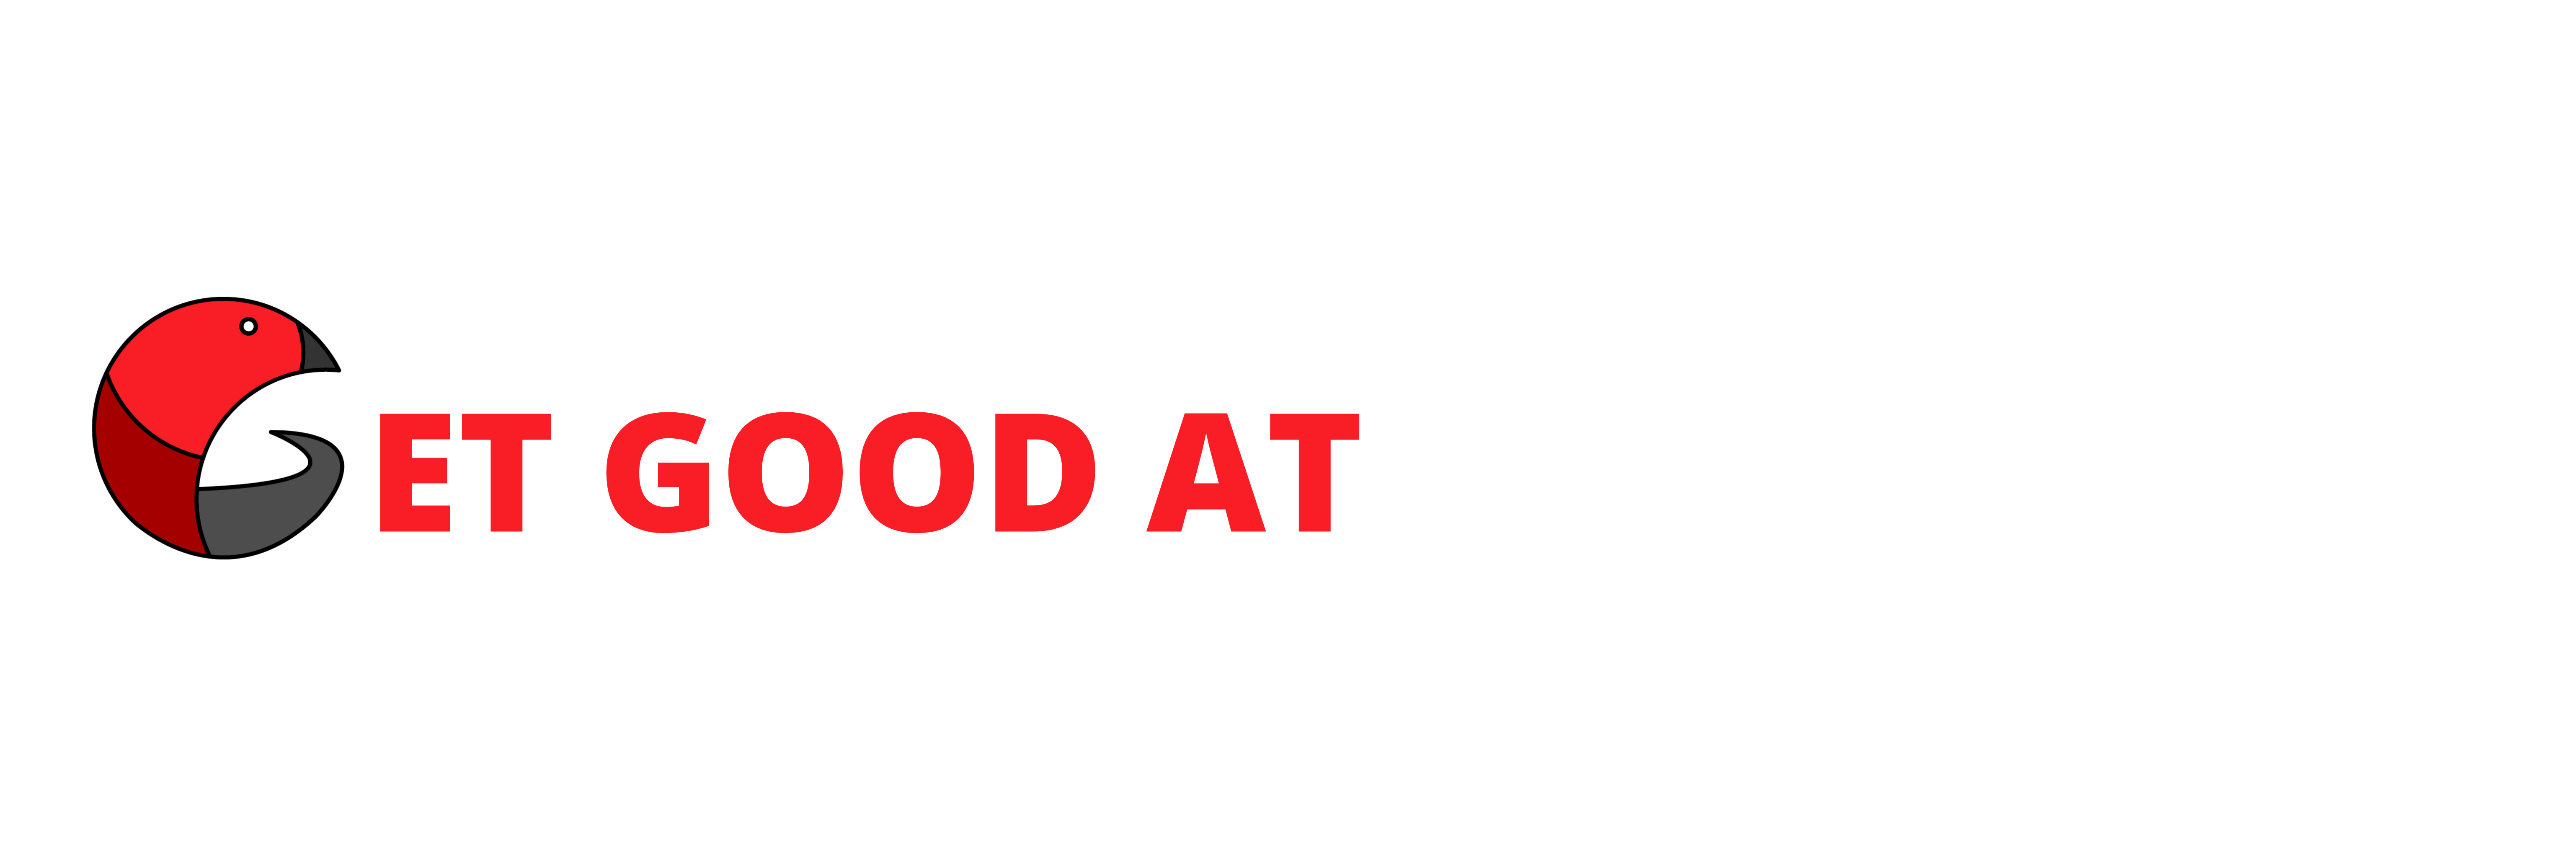 GET GOOD AT BADMINTON Logo